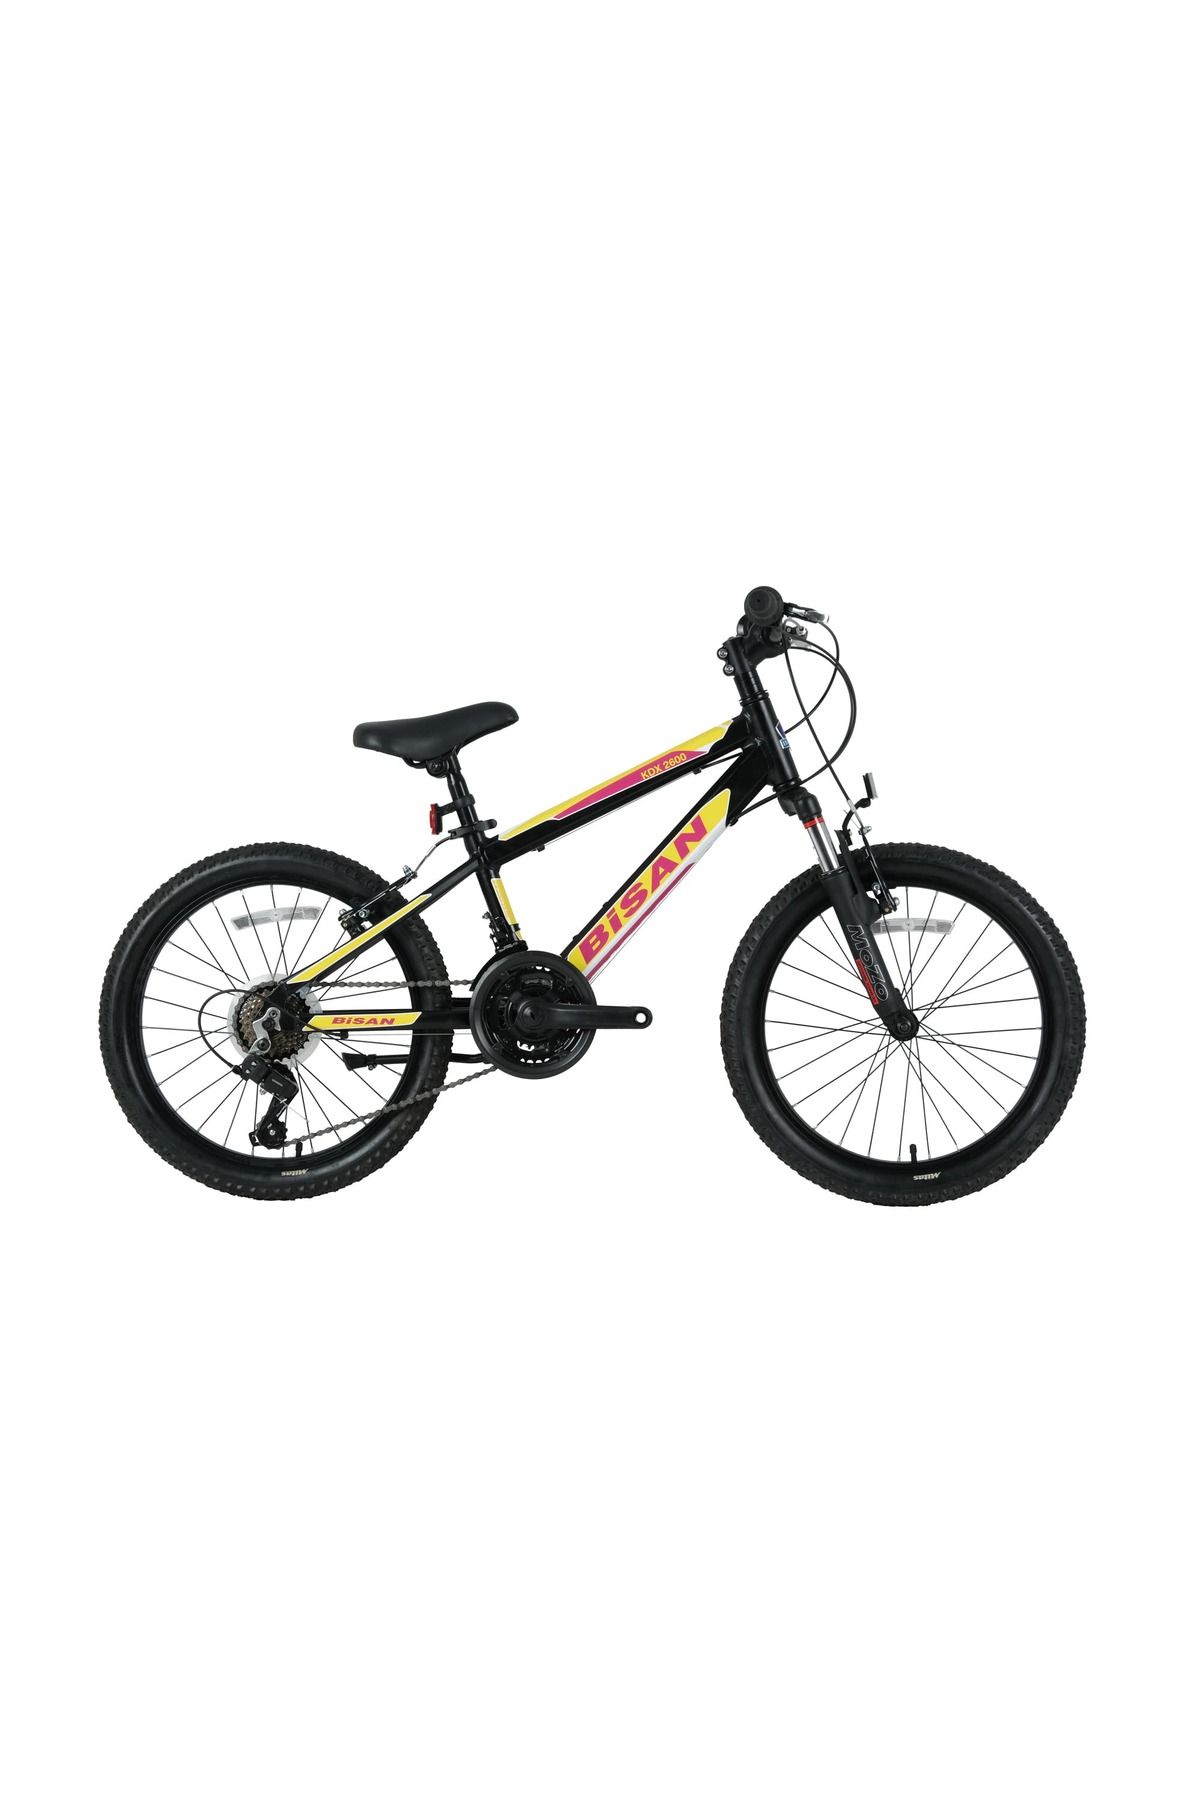 Bisan Kdx 2600 V-23 20 Jant Bisiklet Mat Siyah Sarı